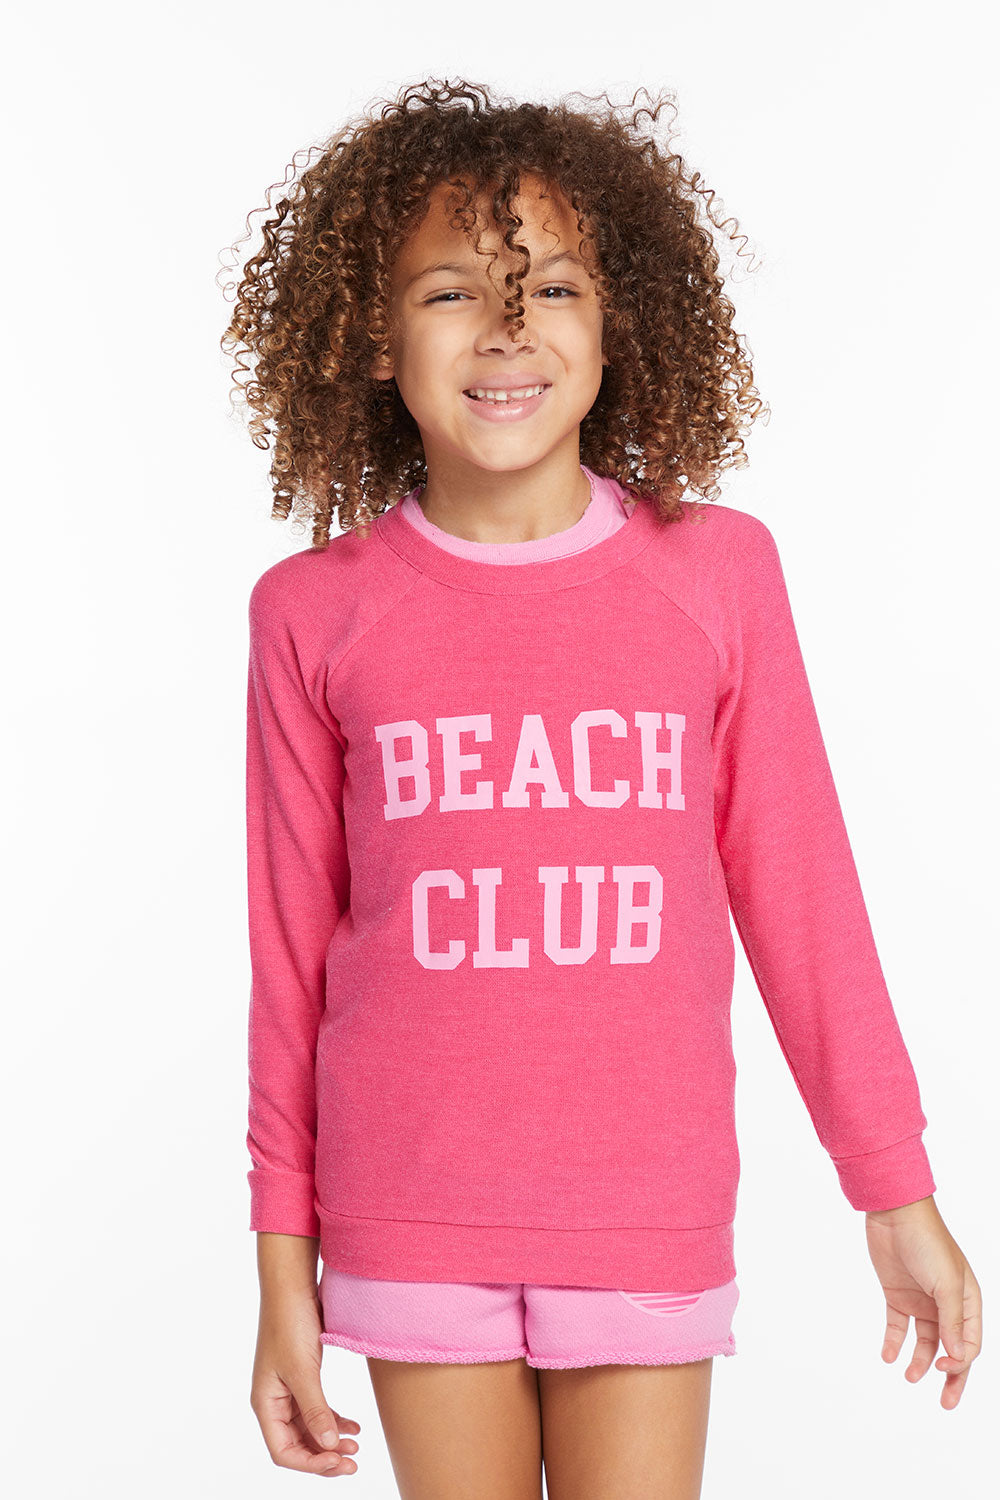 Beach Club Girls Cozy Knit Raglan Pullover GIRLS chaserbrand